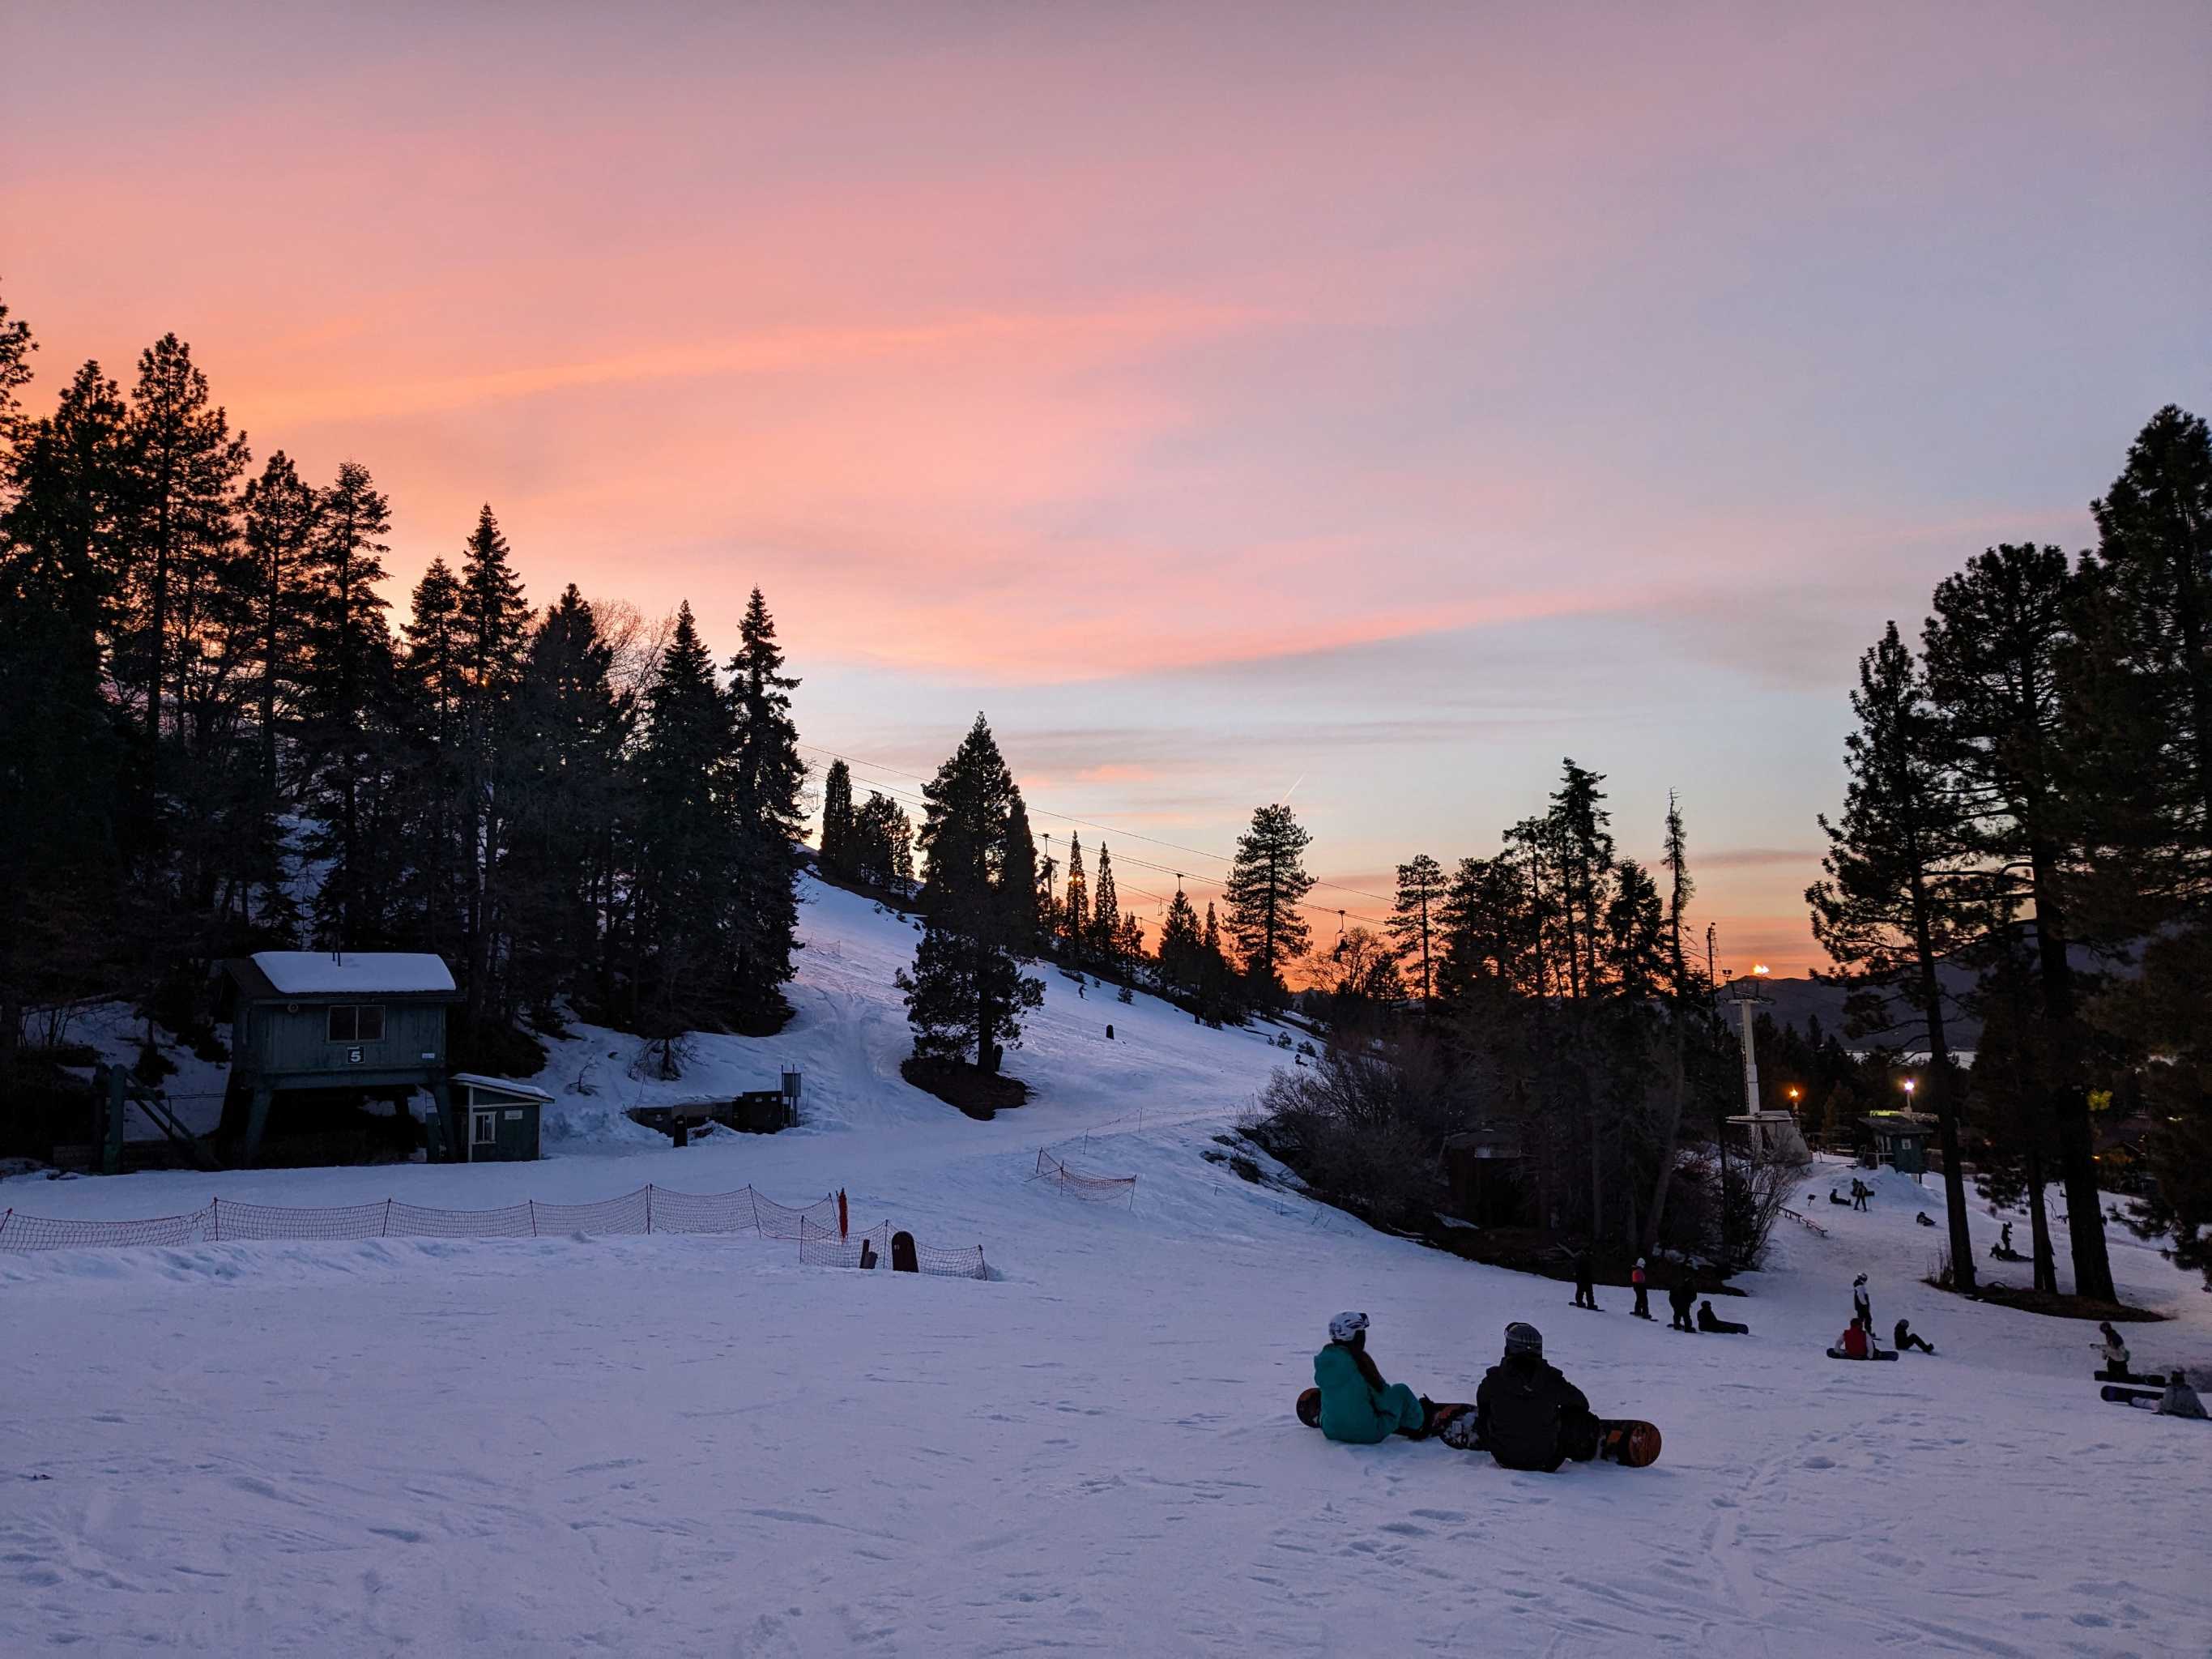 sunset over a ski slope.